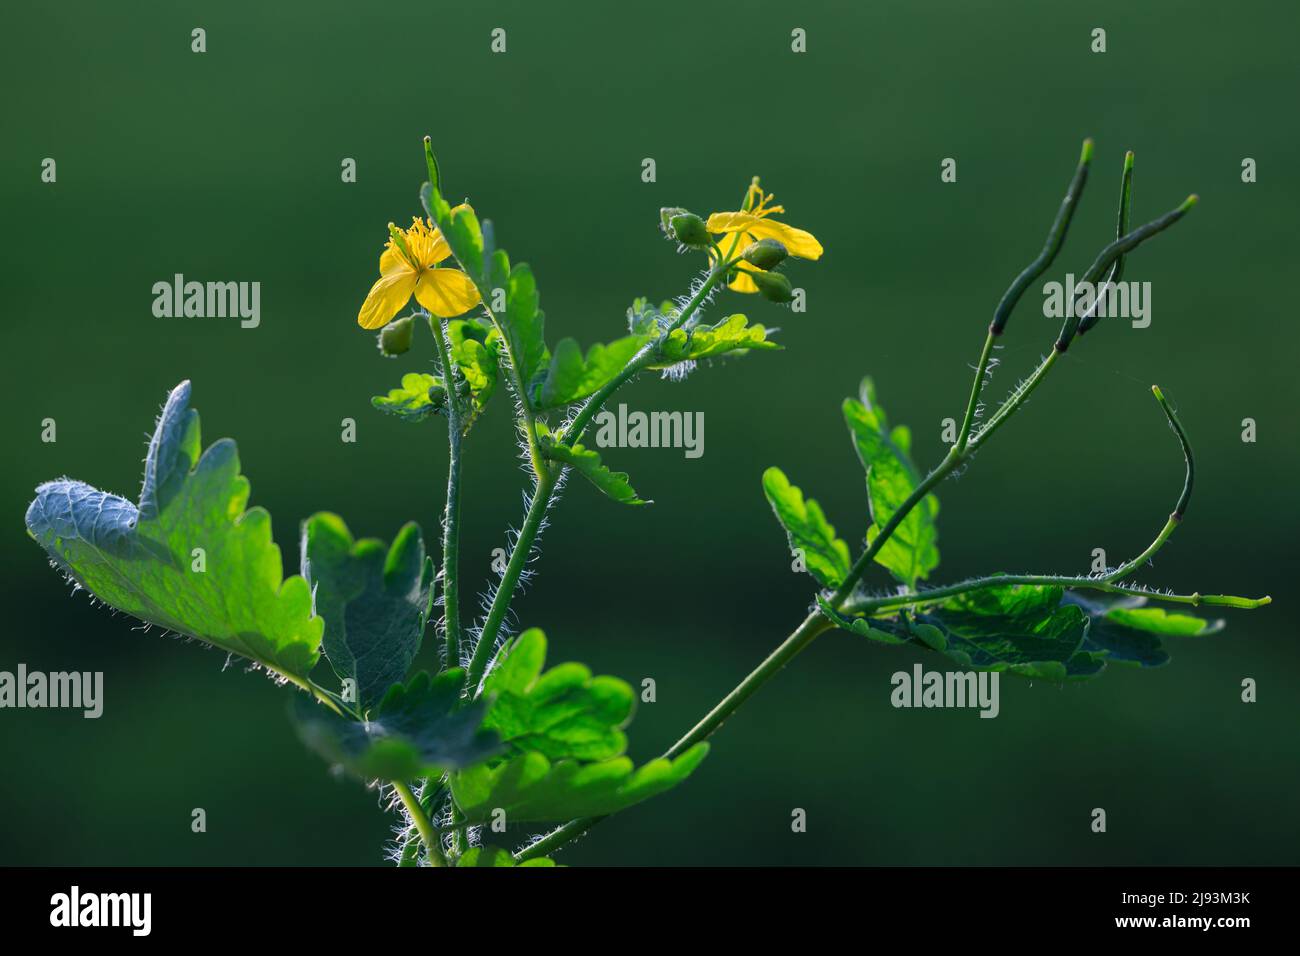 Chelidonium majus ( tetterwort, tetterwort, nipplewort or swallowwort) flowers blooming in forest close up. Macro detail, soft blurry bokeh background Stock Photo